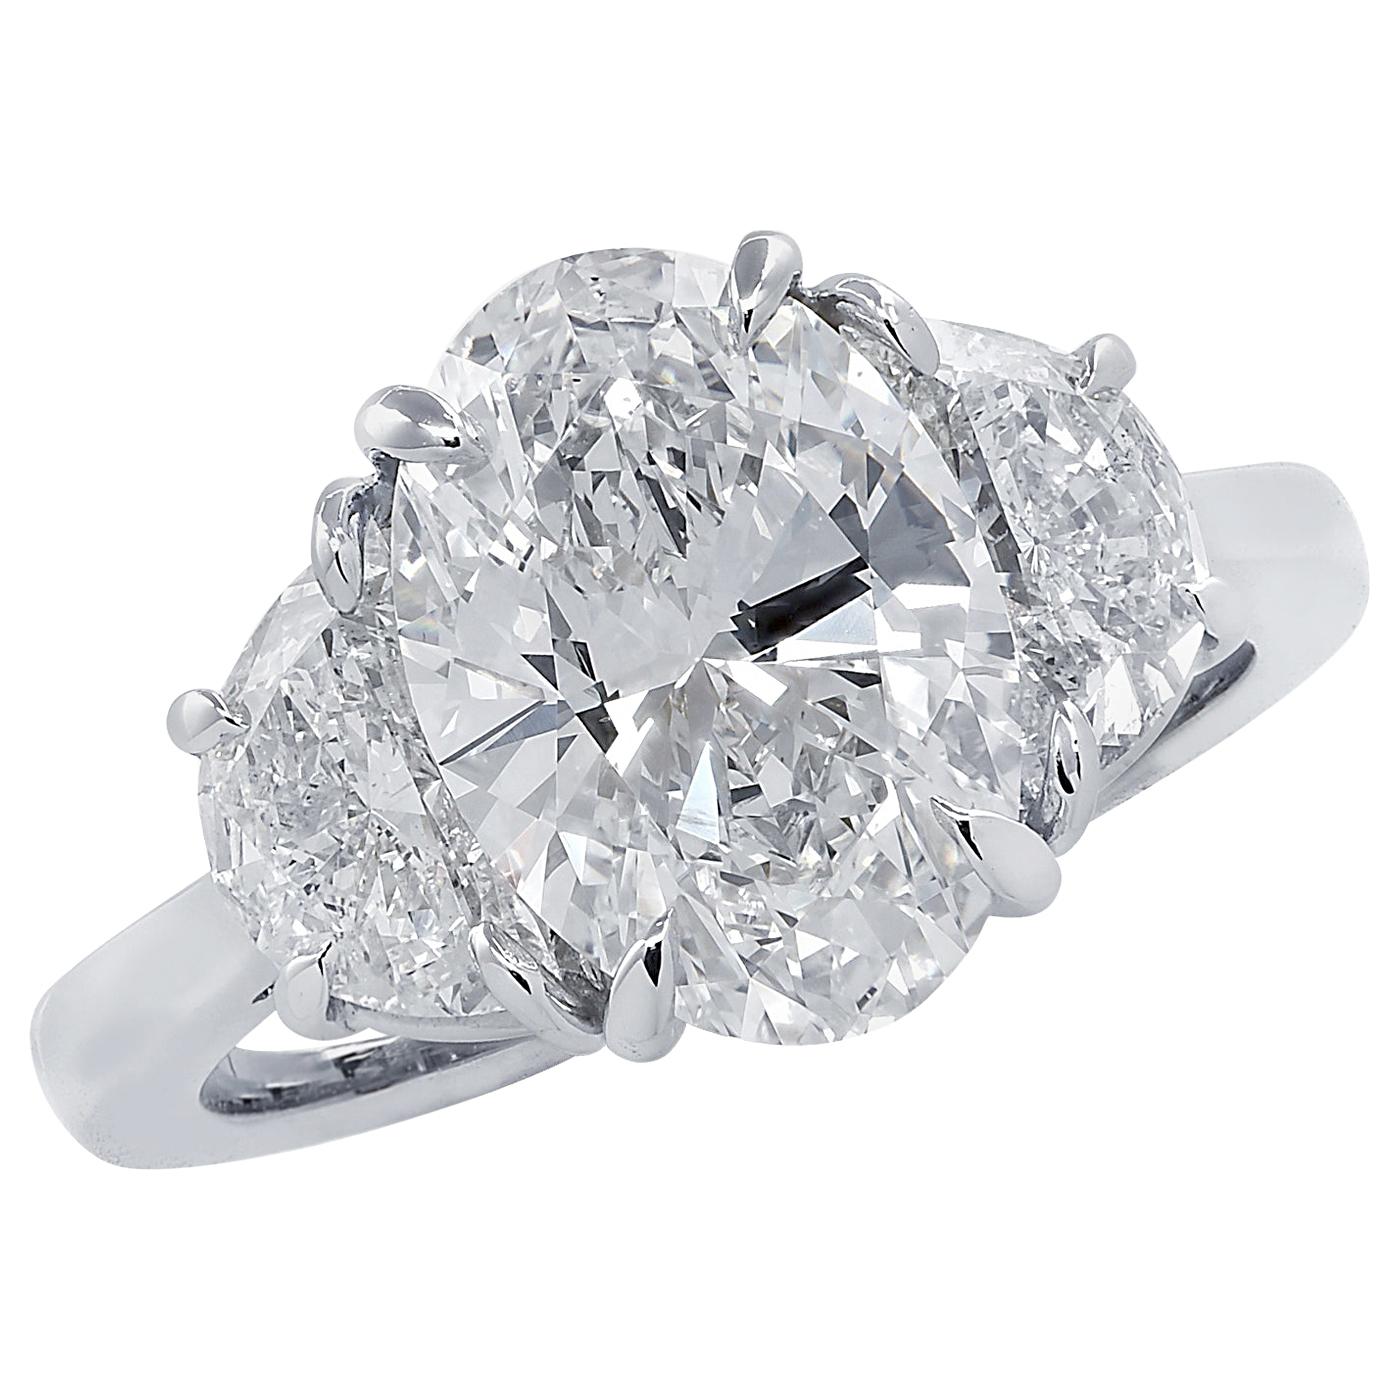 Vivid Diamonds 3.01 Carat GIA Certified Oval Cut Diamond Engagement Ring